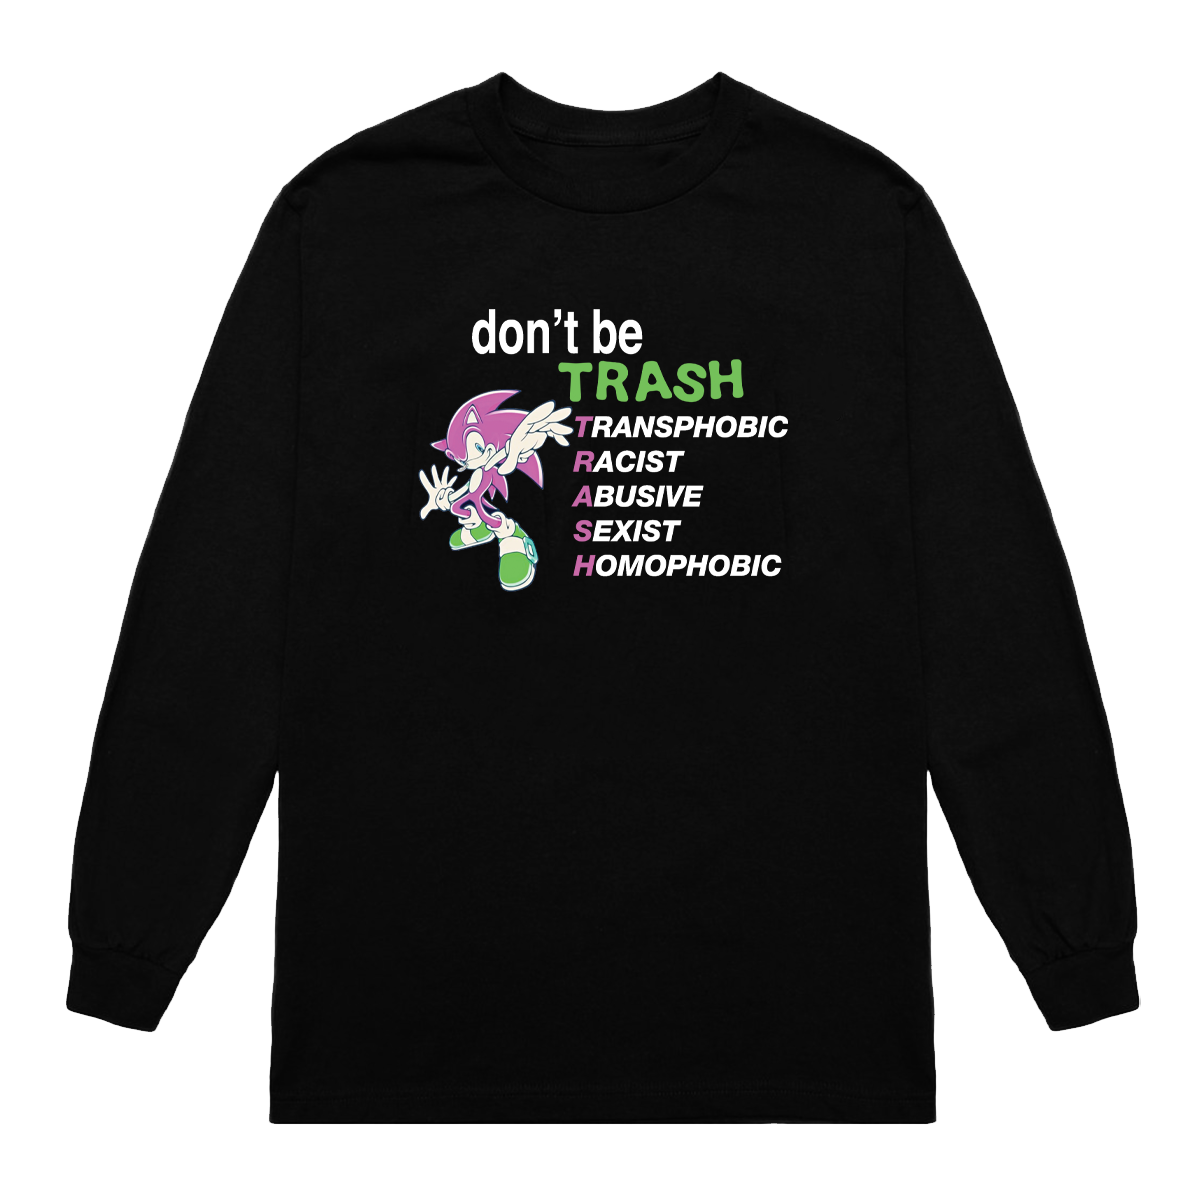 Trash Long Sleeve T-Shirt